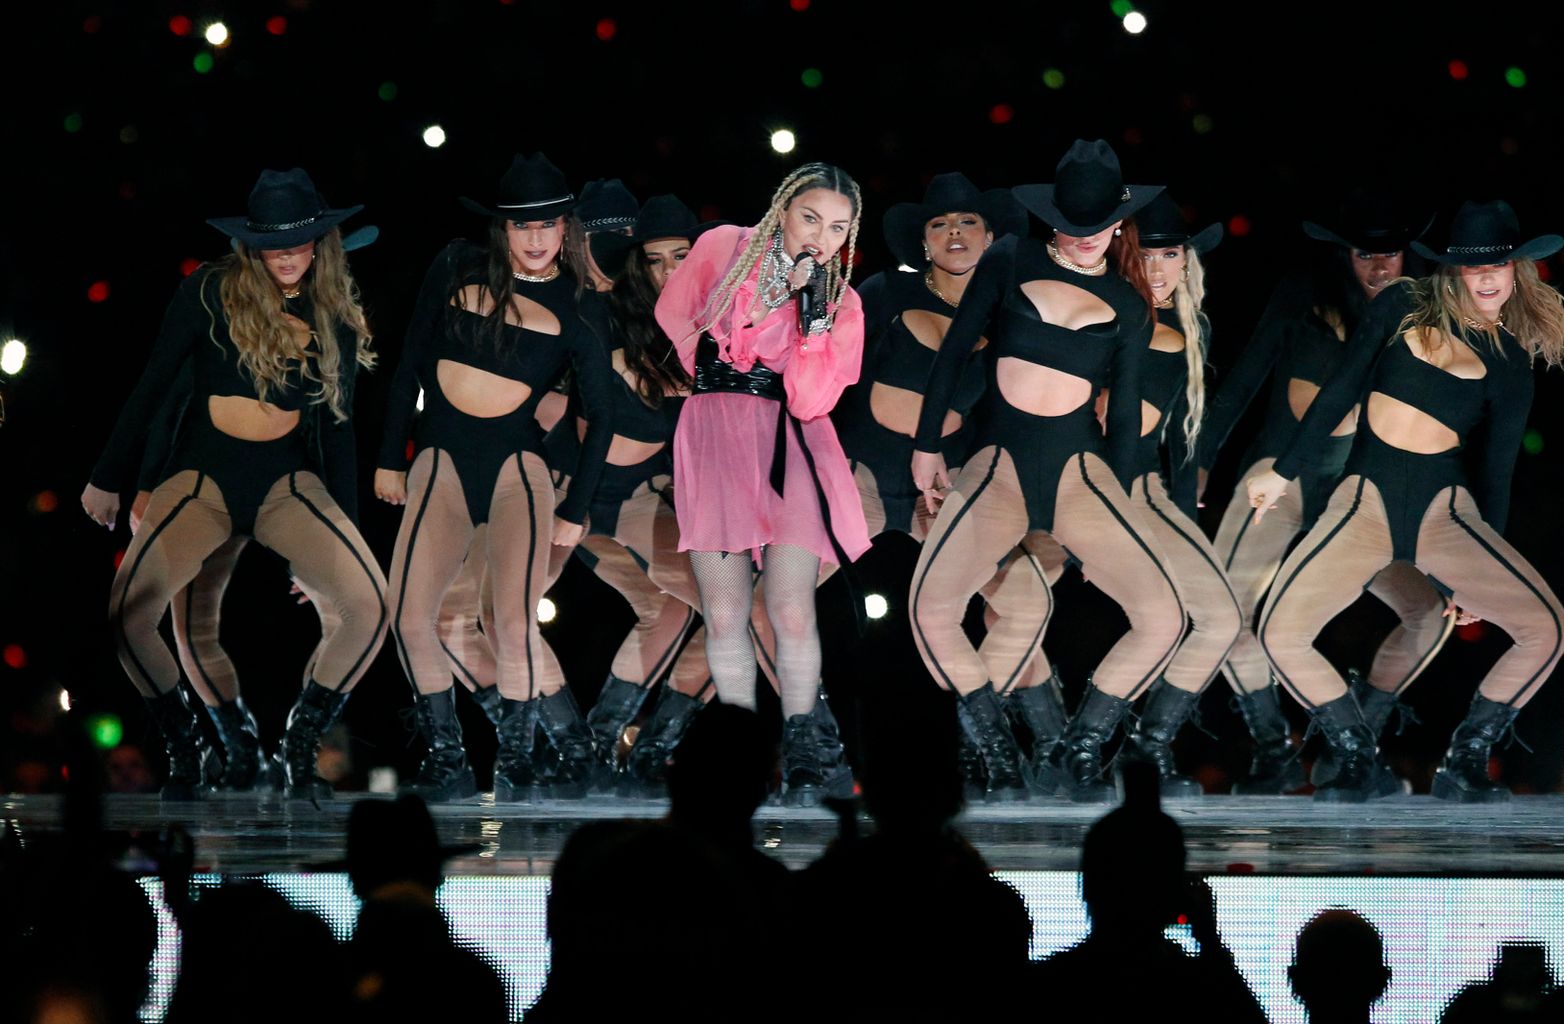 Madonna joins Columbian singer Maluma on stage